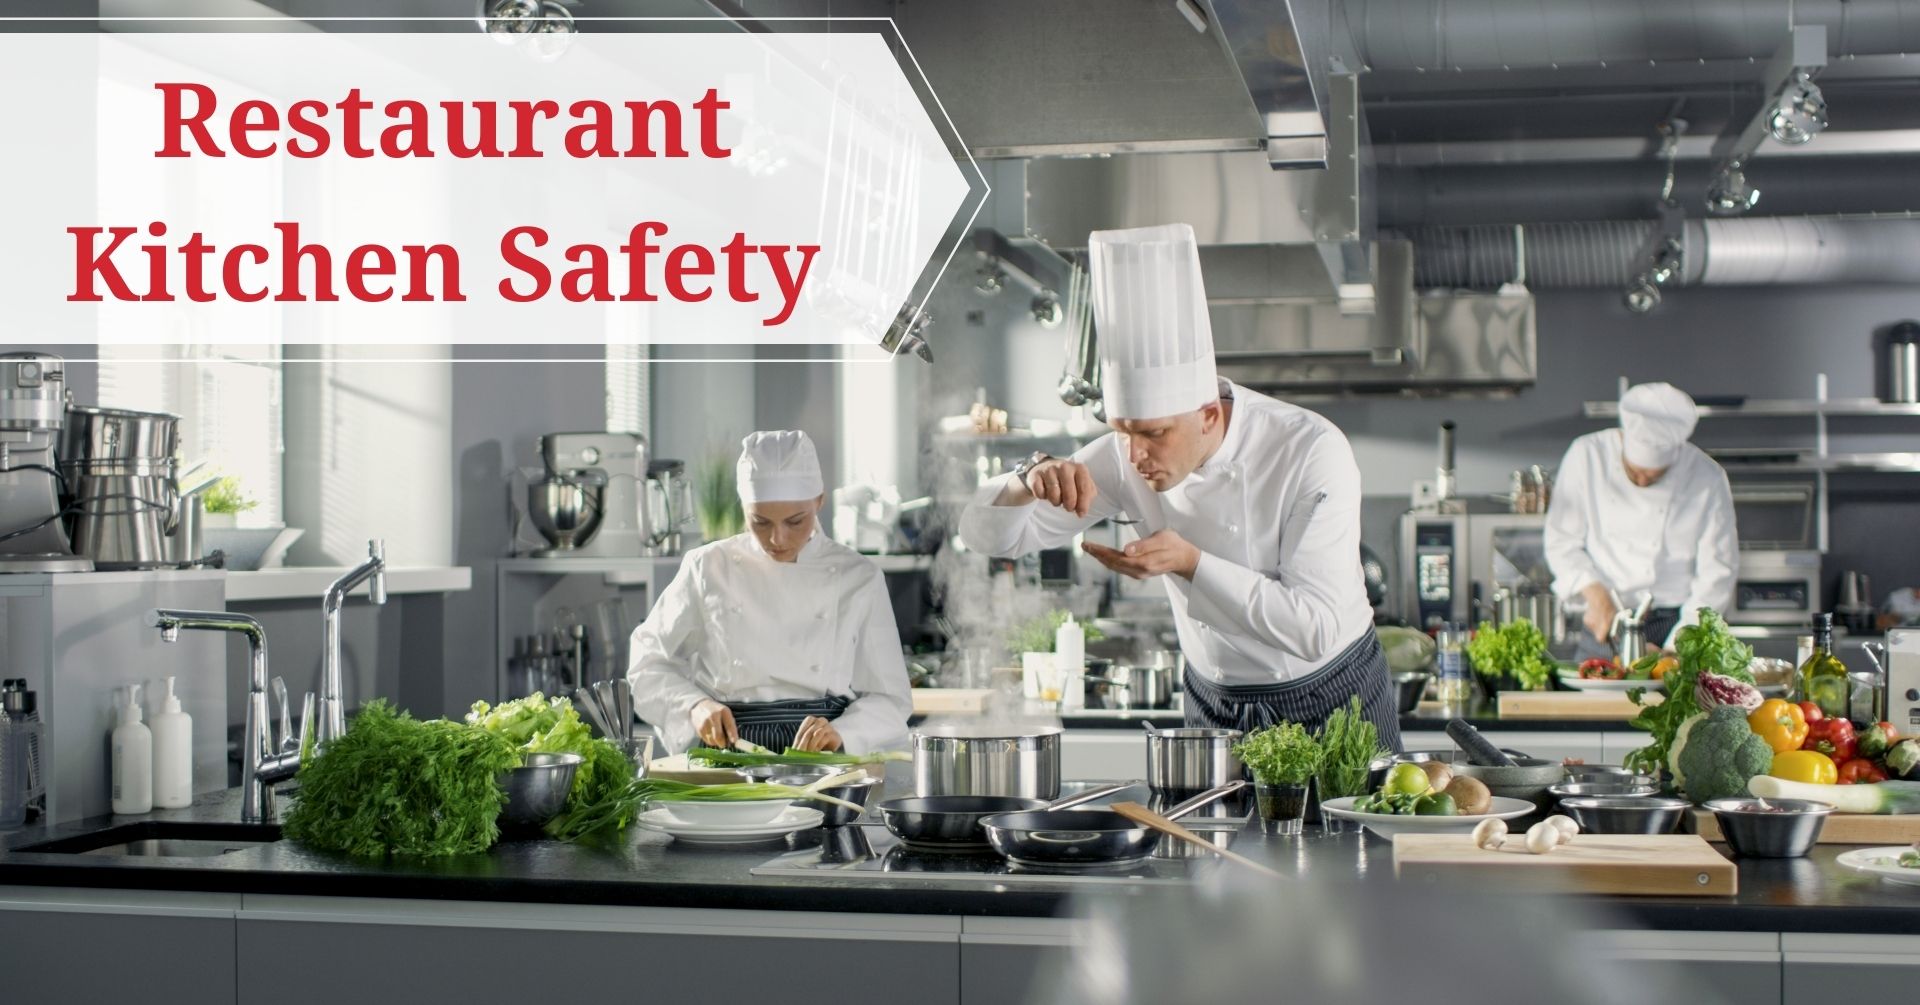 Restaurant Insurance, Commercial Insurance, Restaurant Safety, Kitchen Safety, Restaurant Kitchen Safety, Chef